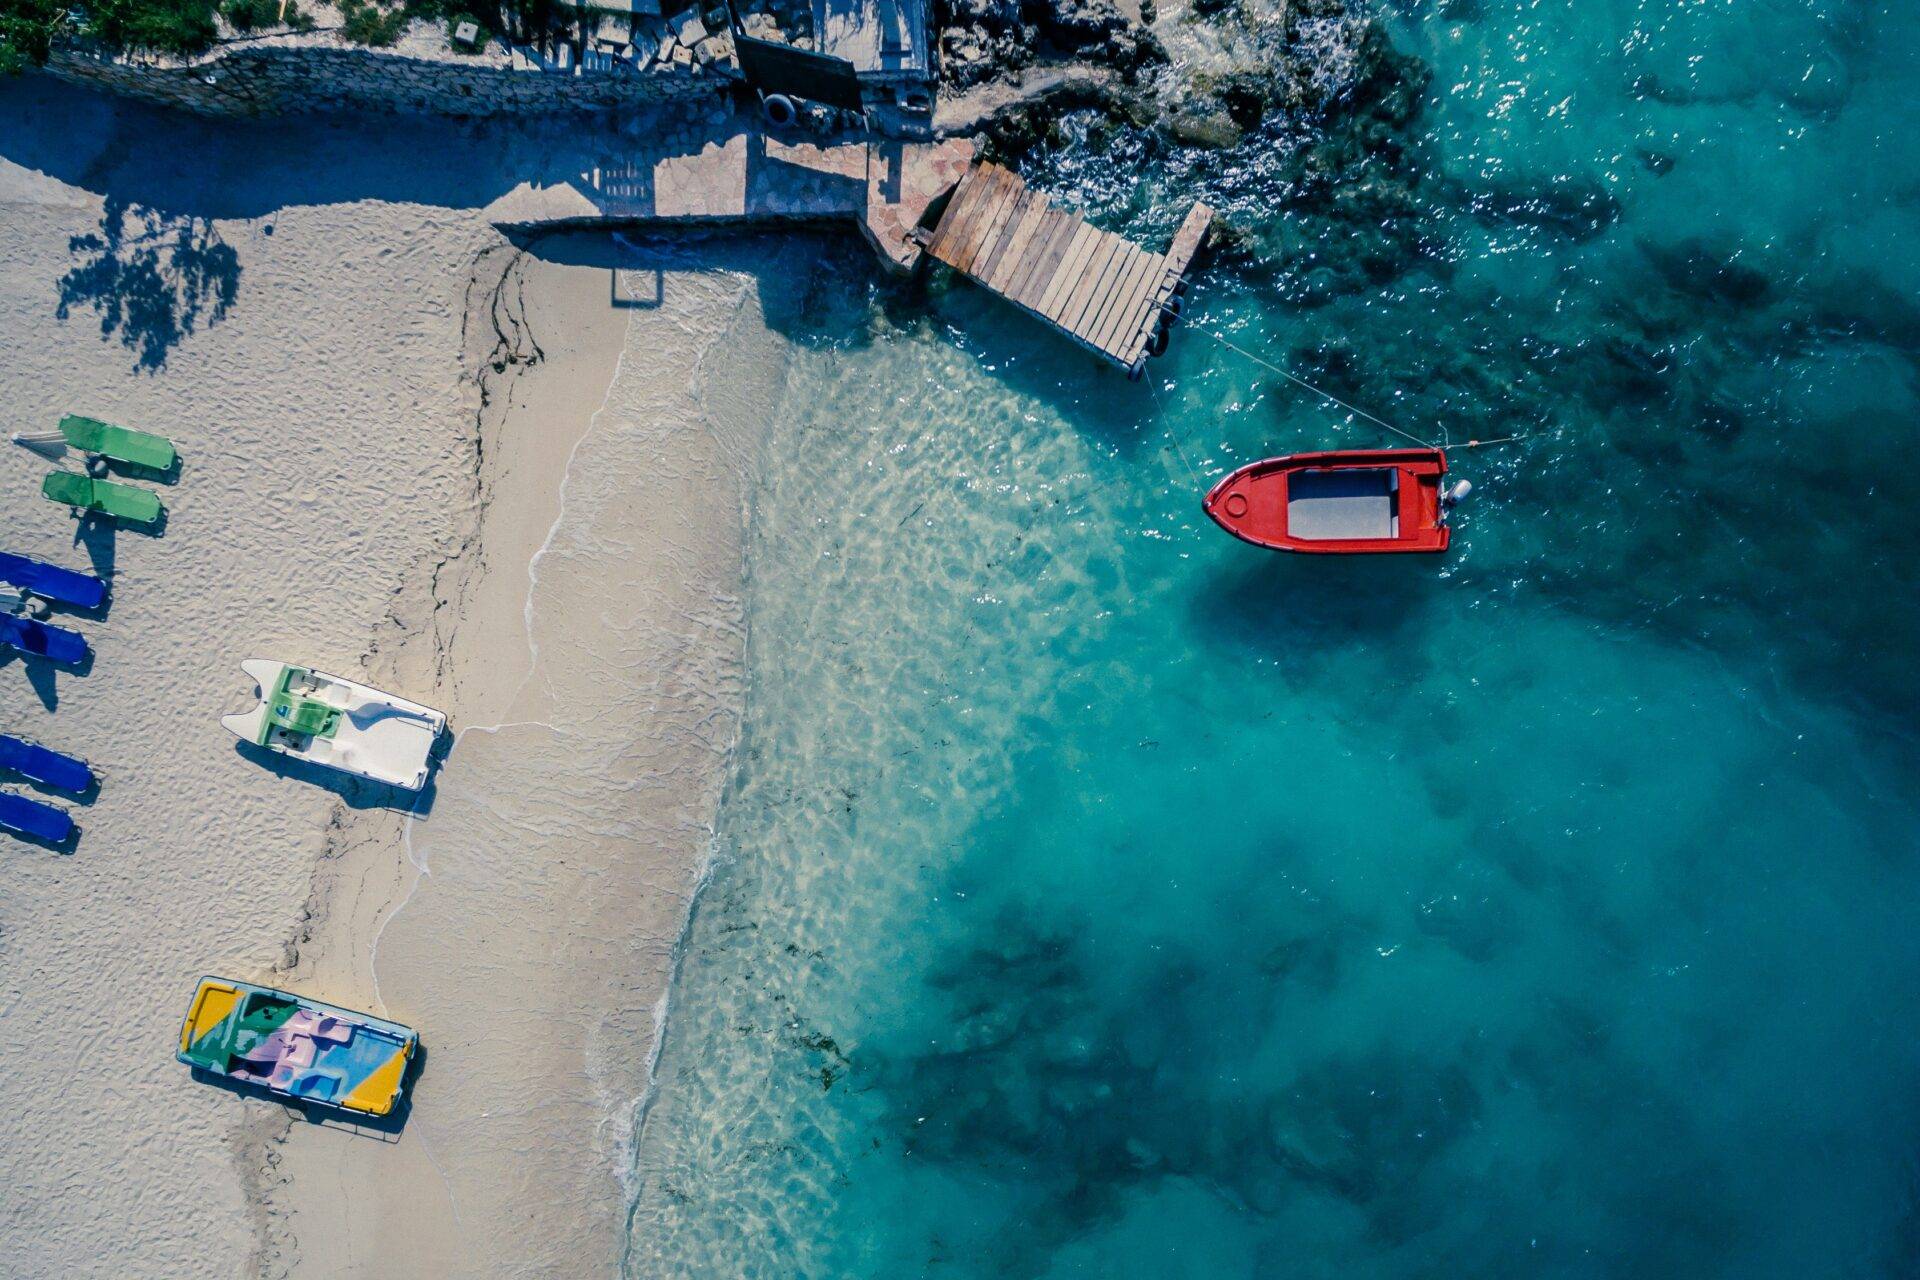 Cheap Beaches in Europe
Sarandë, Albania